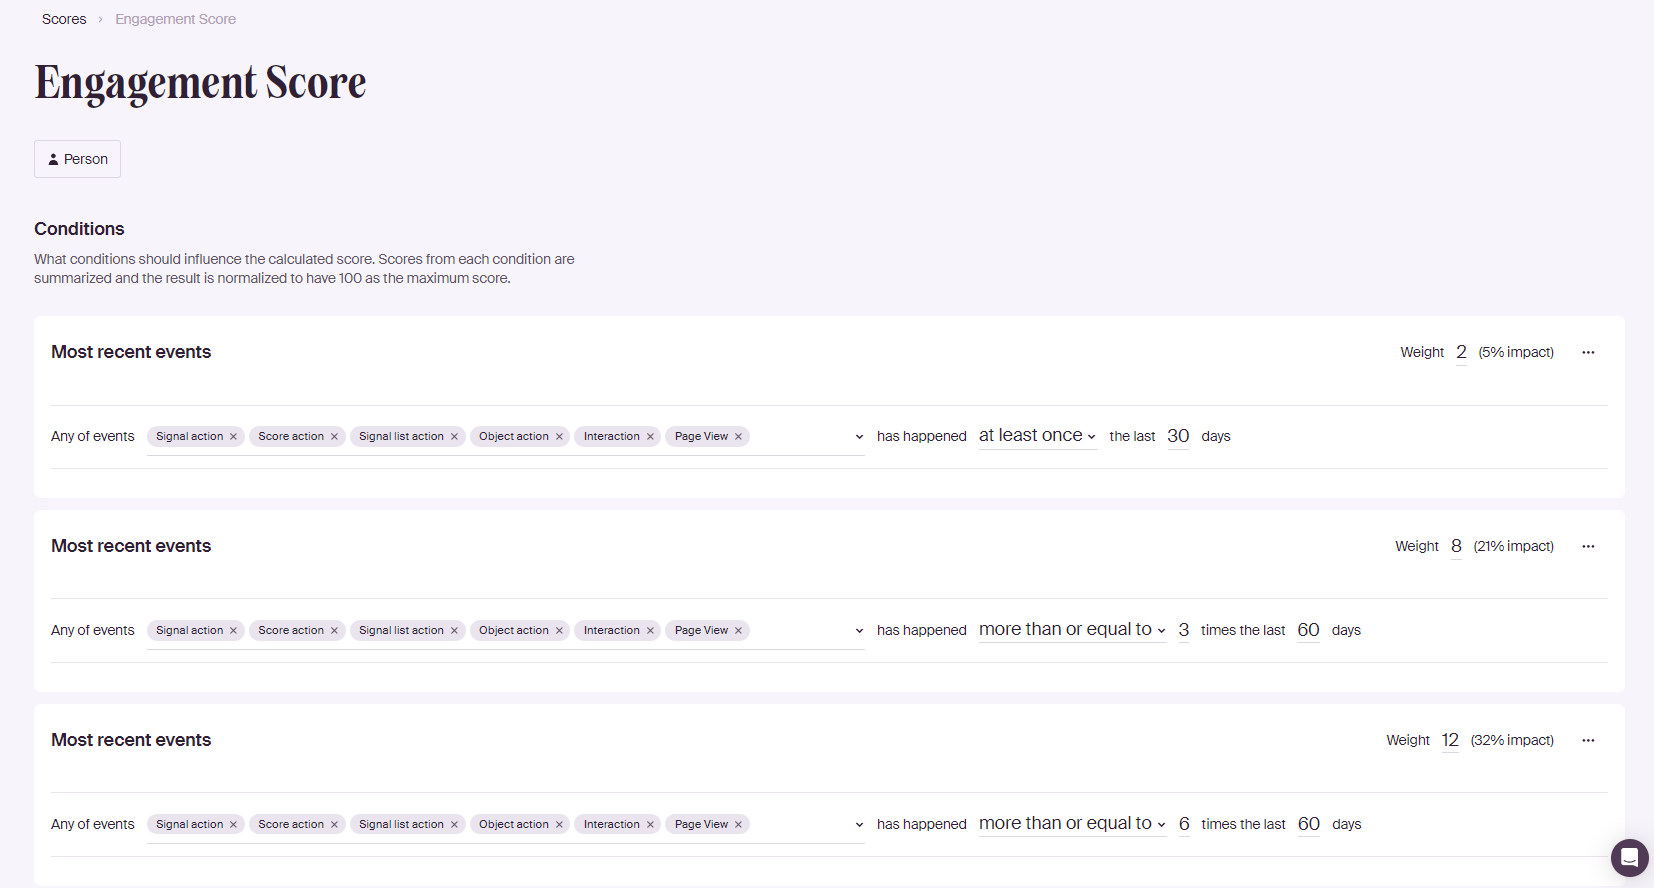 Breyta platform screenshots showing the Engagement Score with "Most recent events" fields